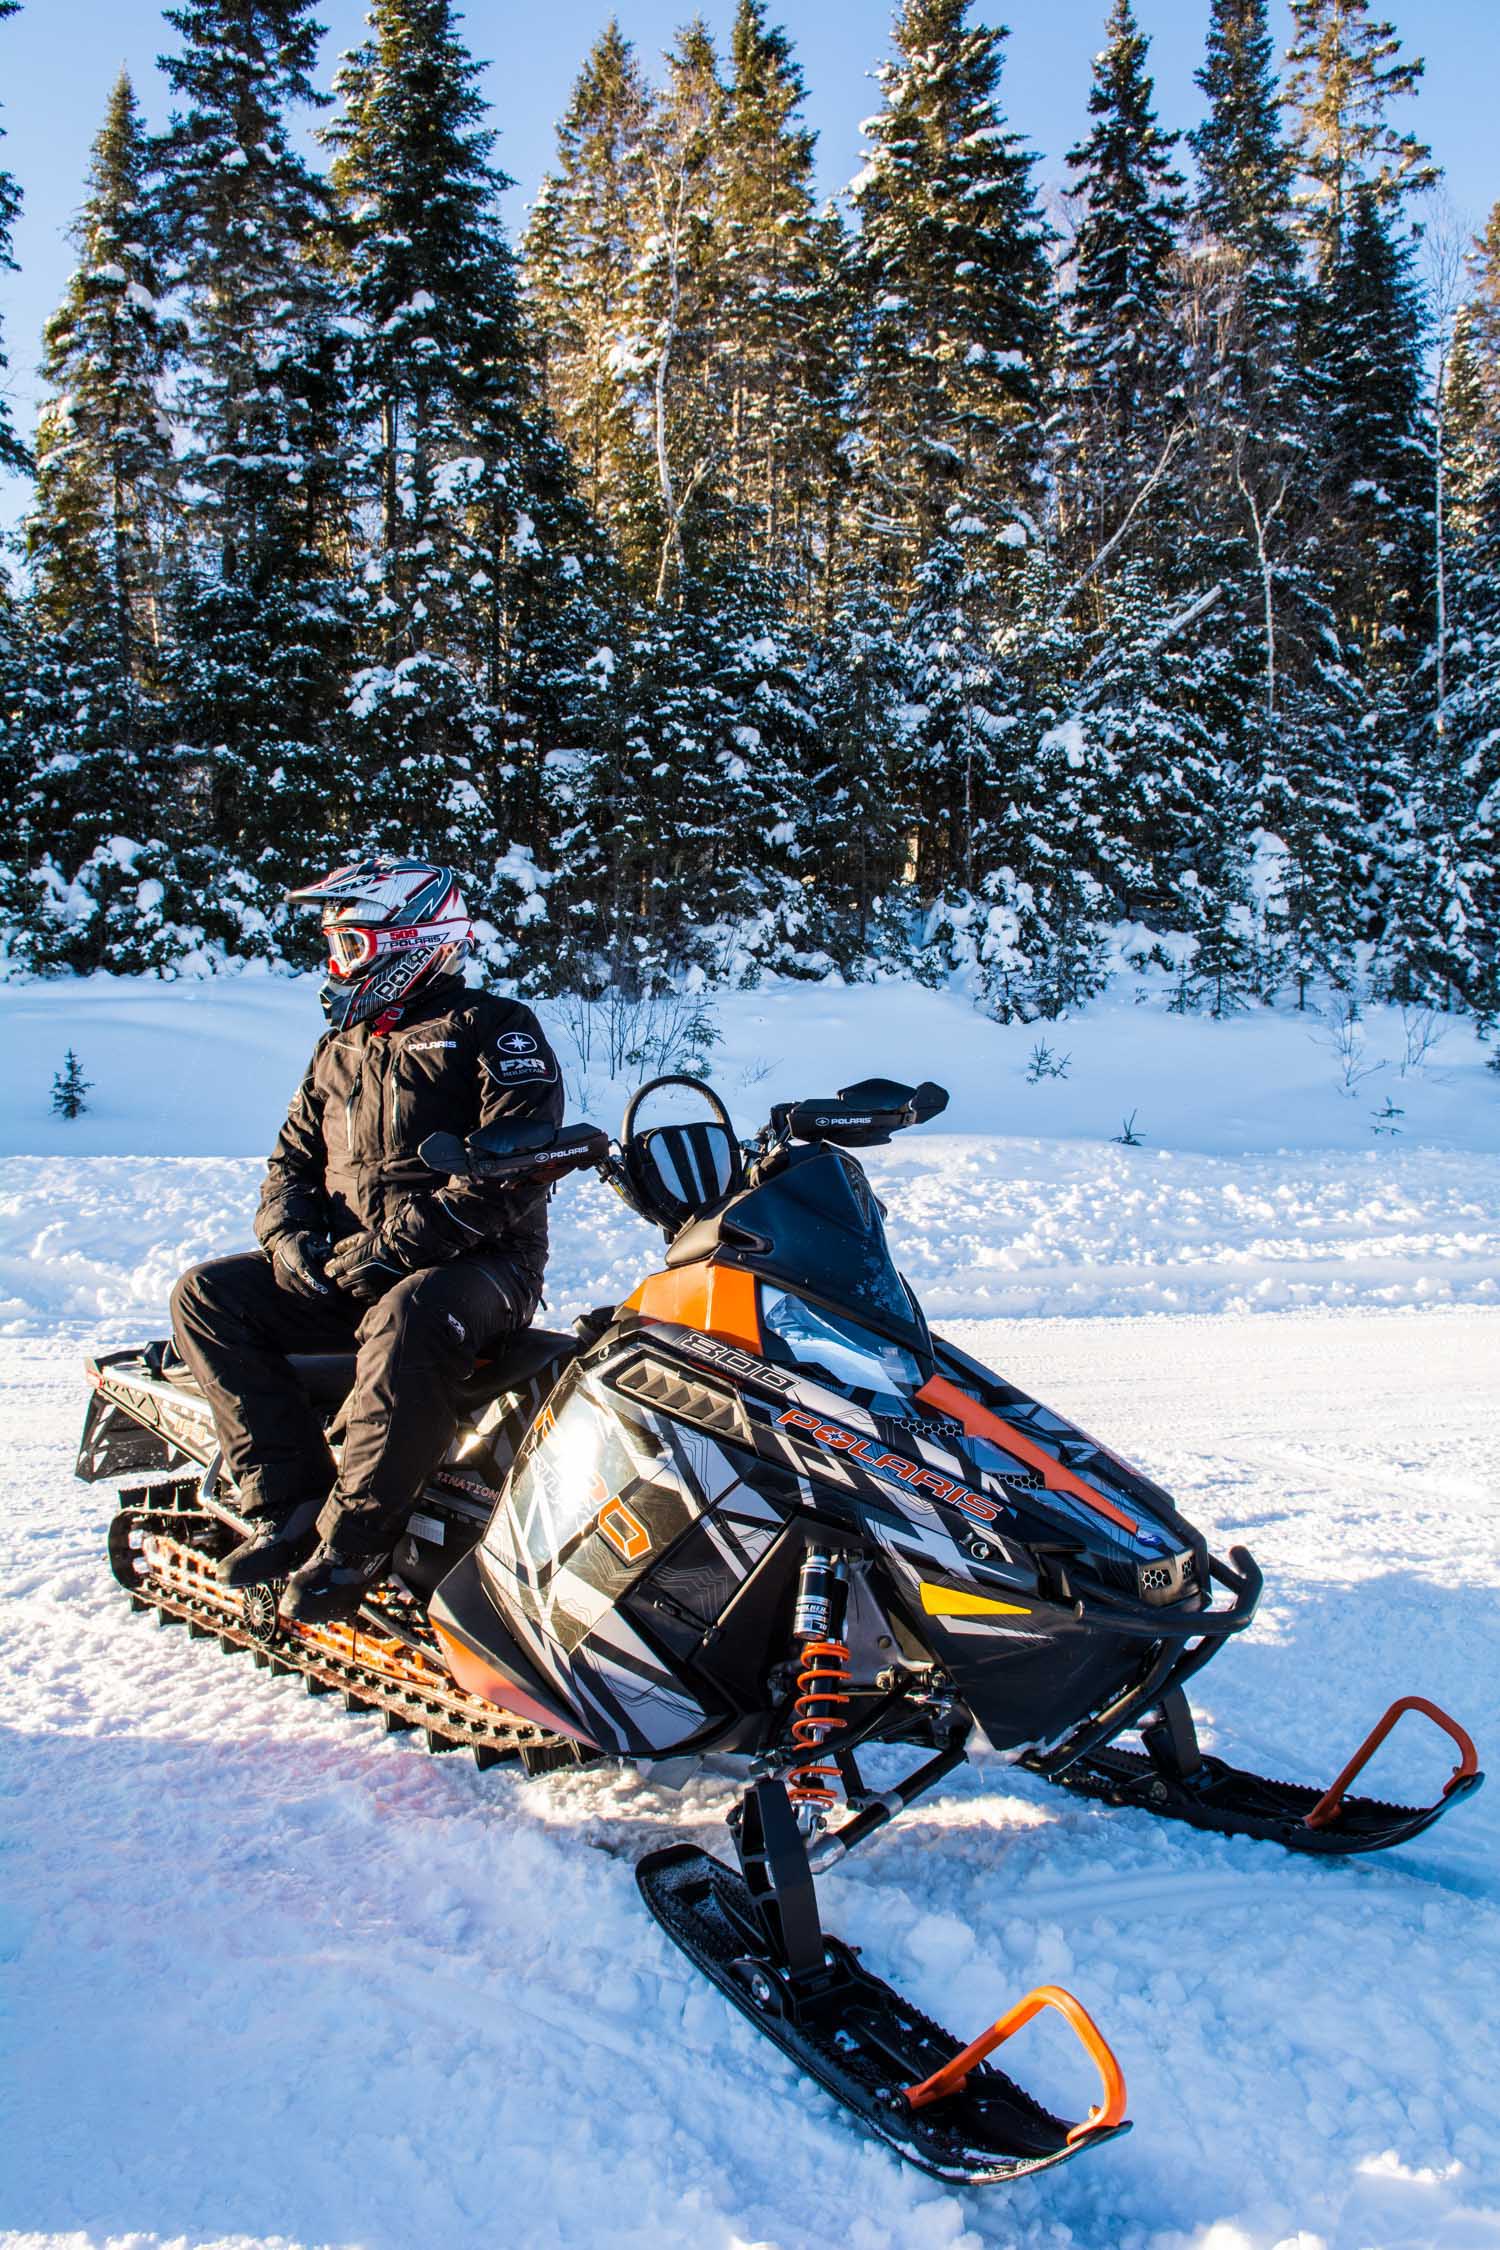 feb10-11 2015-Tourism New Brunswick-T4G Kick-winter 2015-New Brunswick Great Northern Odyssey-snowmobile trip-Mount Carleton-NB-photo by Aaron McKenzie Fraser-www.amfraser.com-_AMF4156.jpg